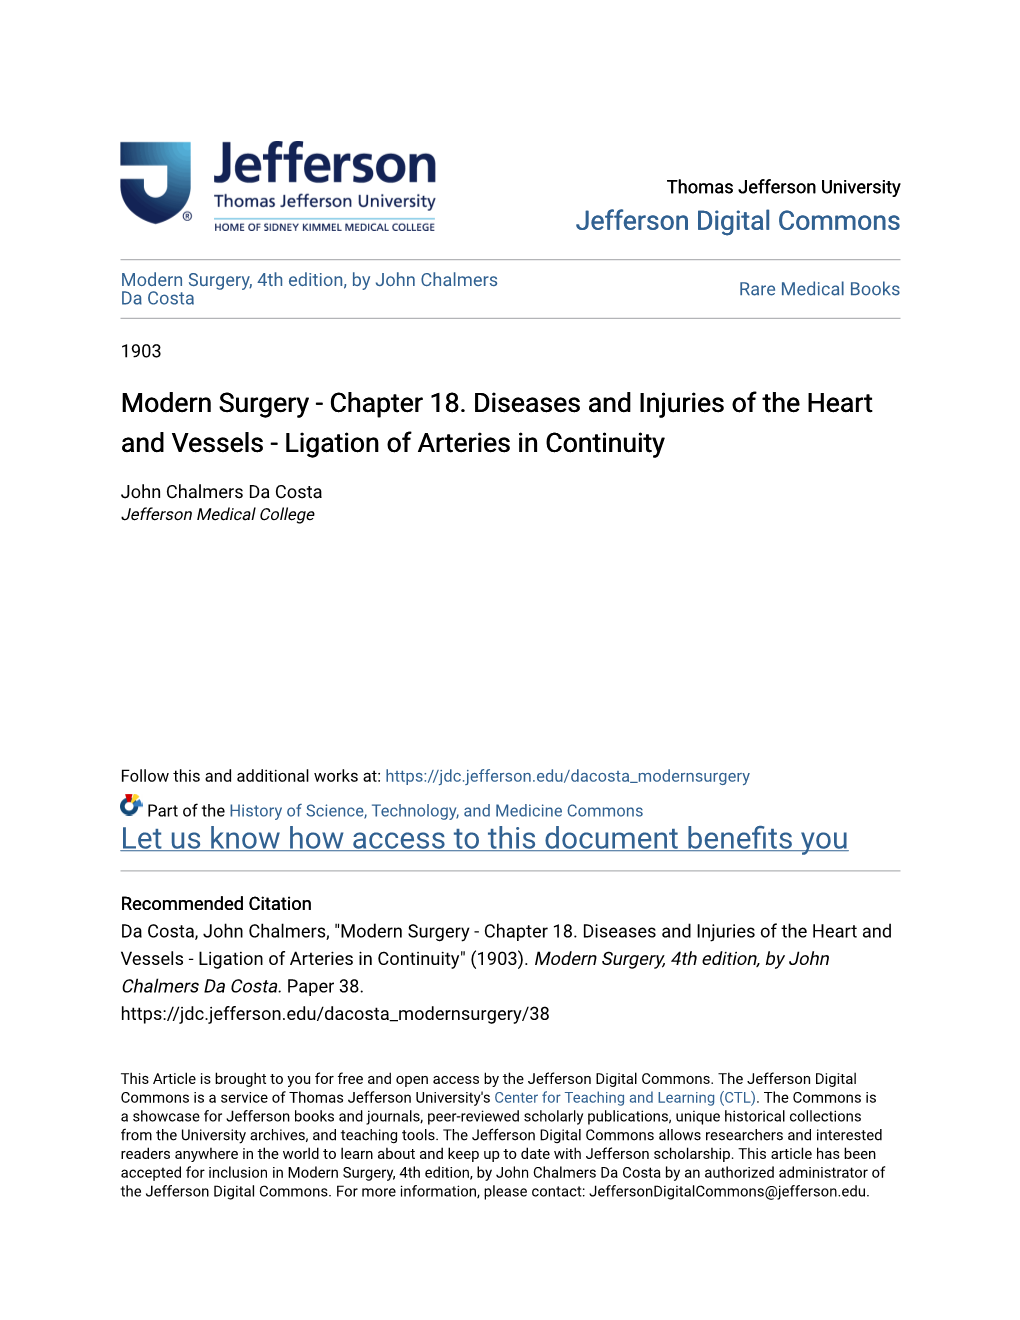 Modern Surgery, 4Th Edition, by John Chalmers Da Costa Rare Medical Books